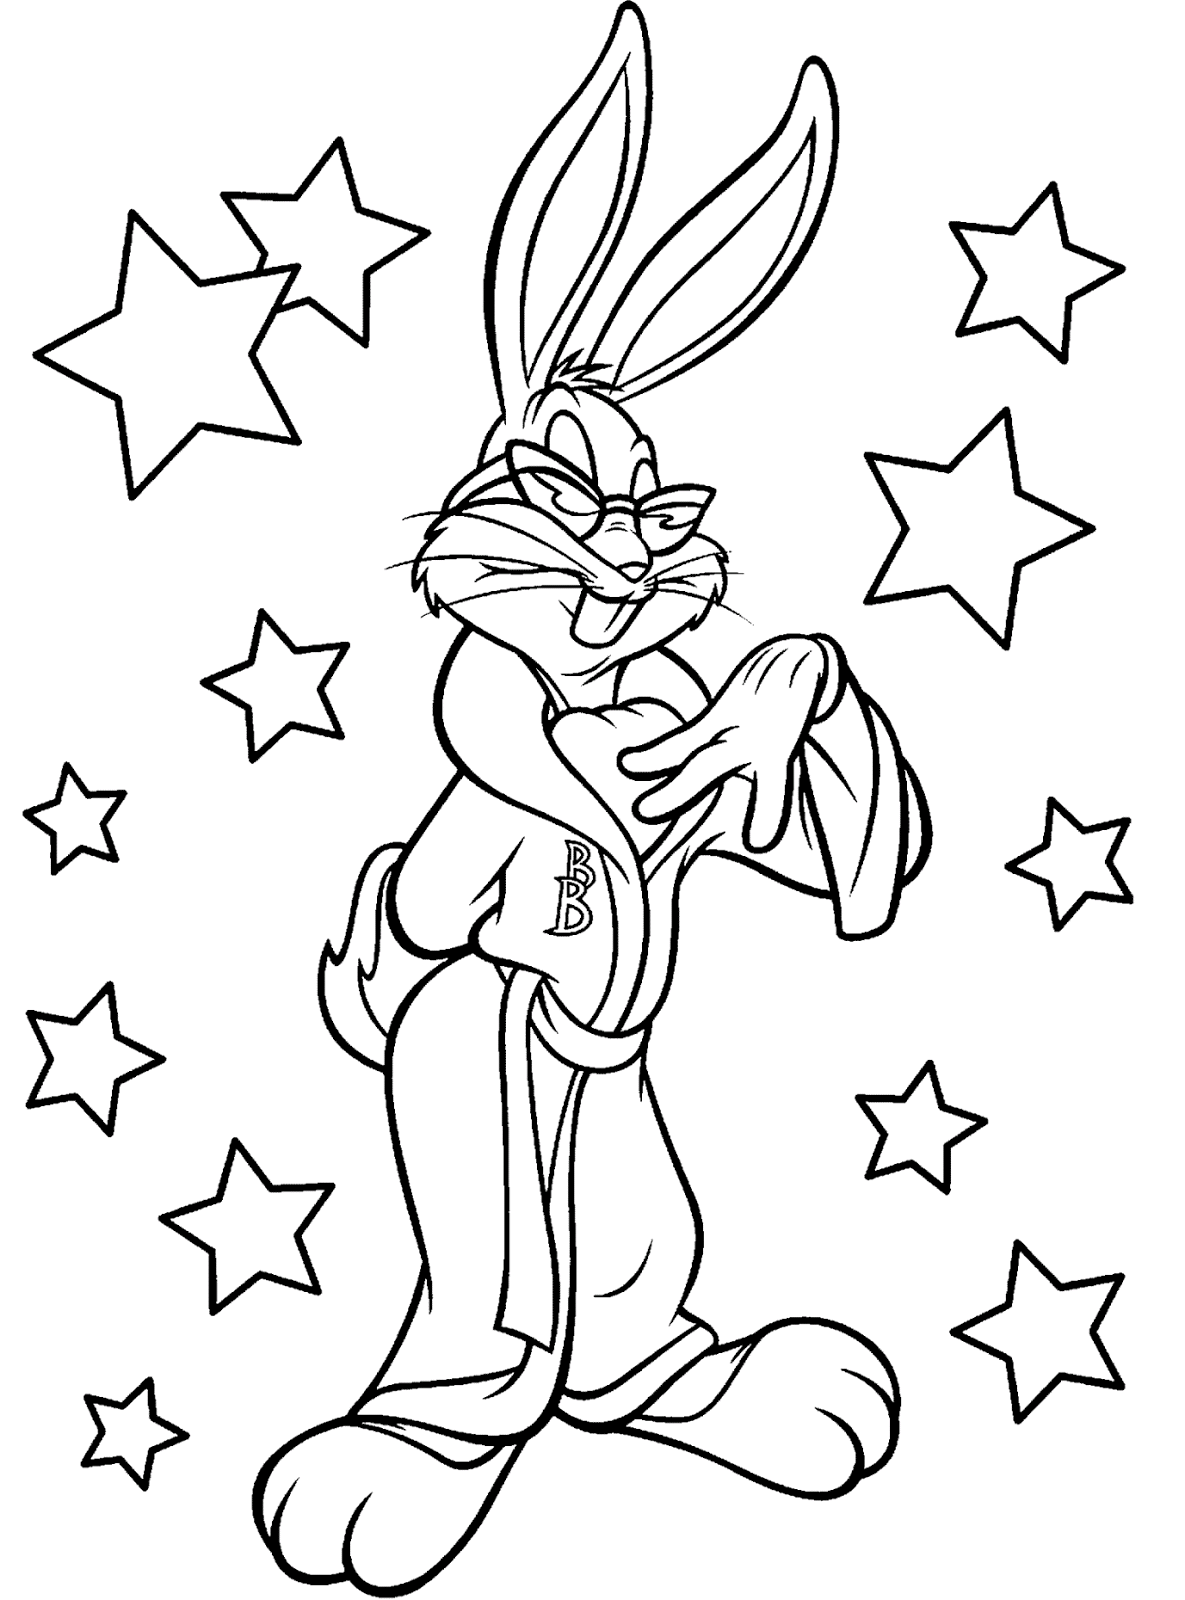 Belajar Mewarnai Gambar Kartun Bugs Bunny Kelinci Lucu Yang Cerdik